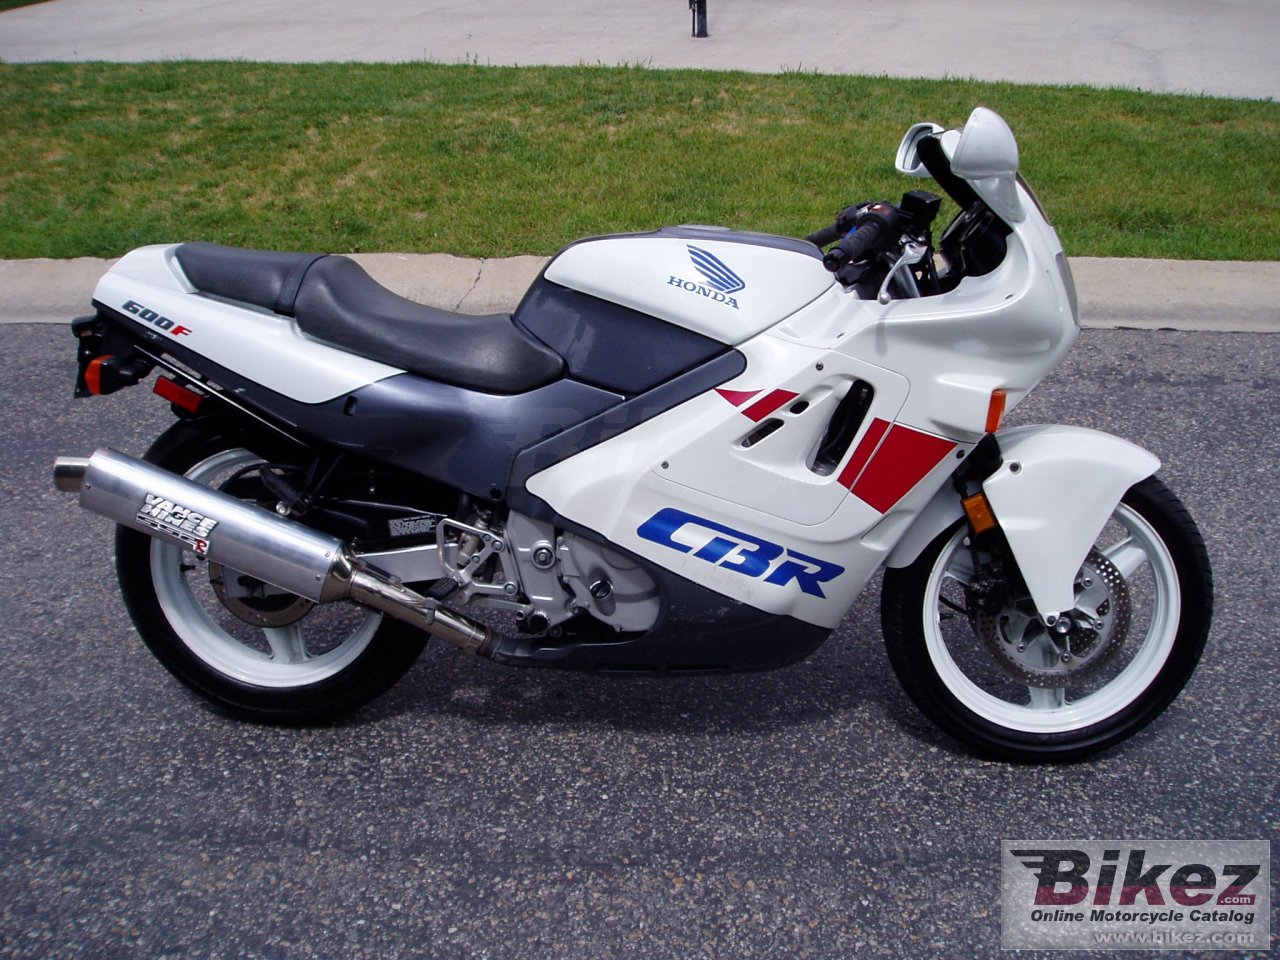 Honda CBR 600 F (reduced effect)